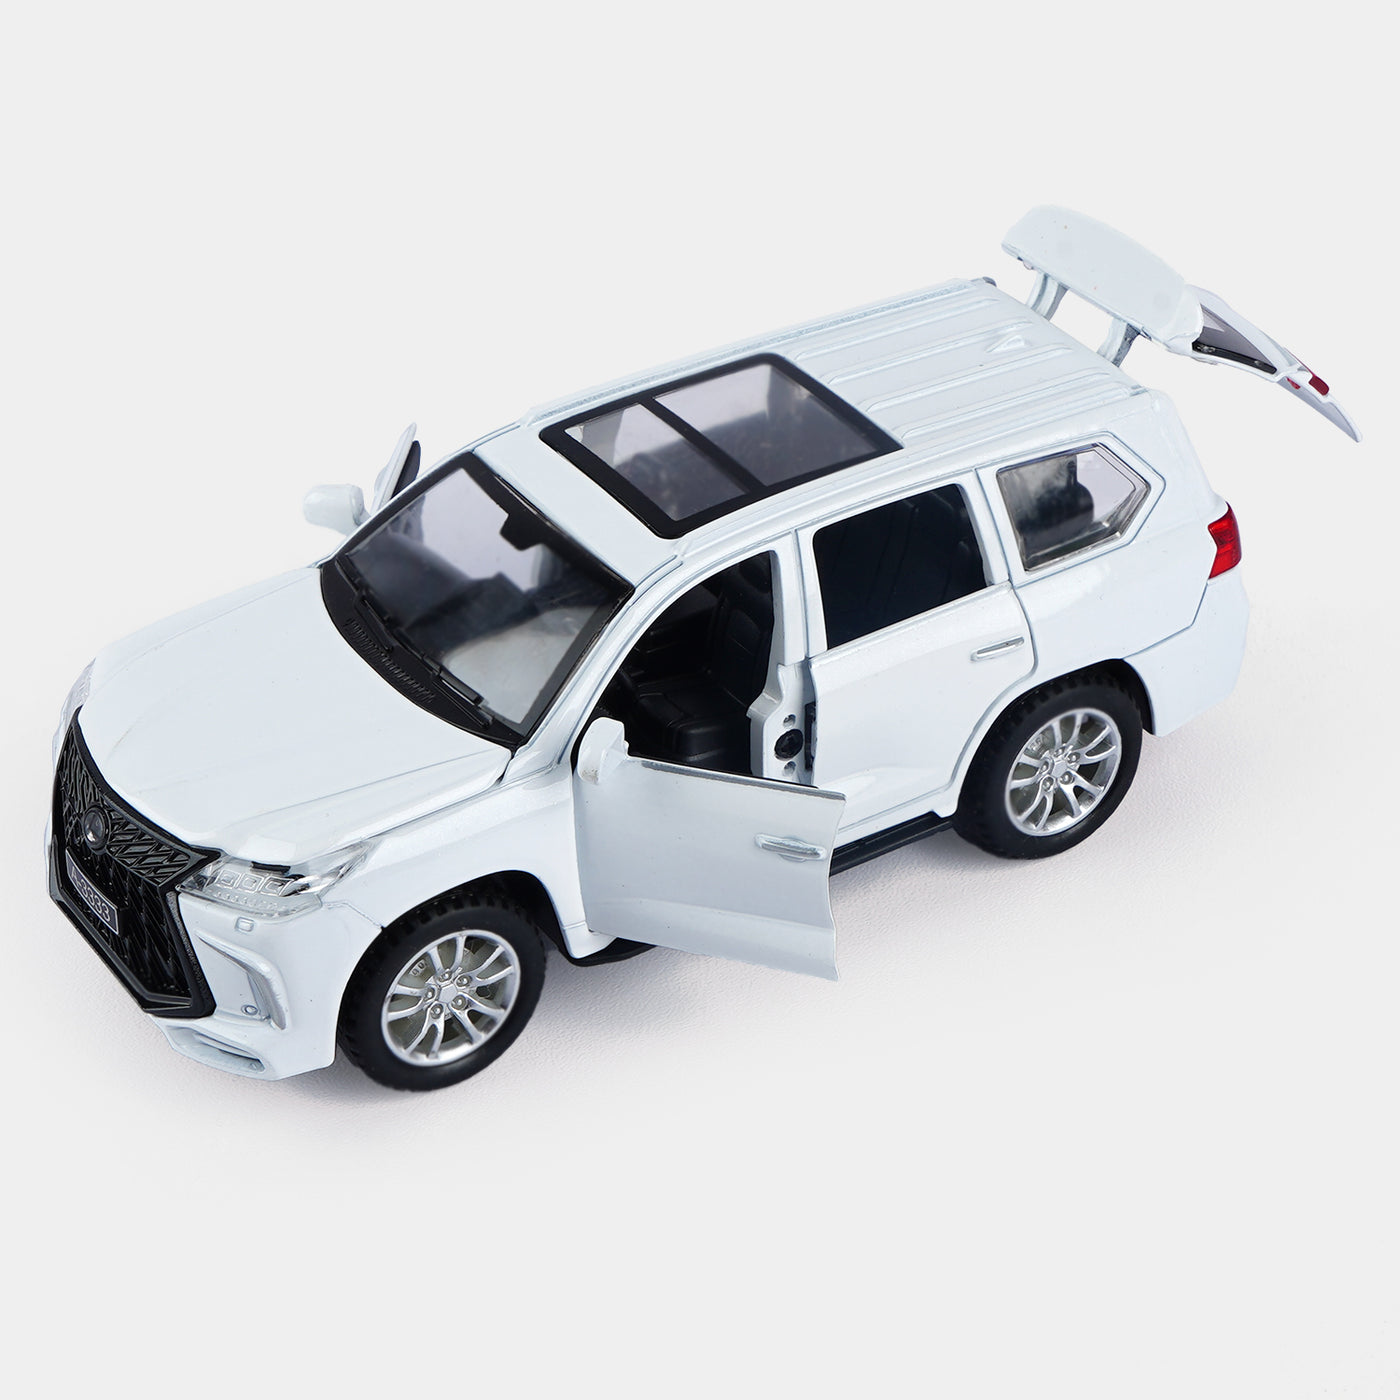 DIE-CAST MODEL CAR FOR KIDS